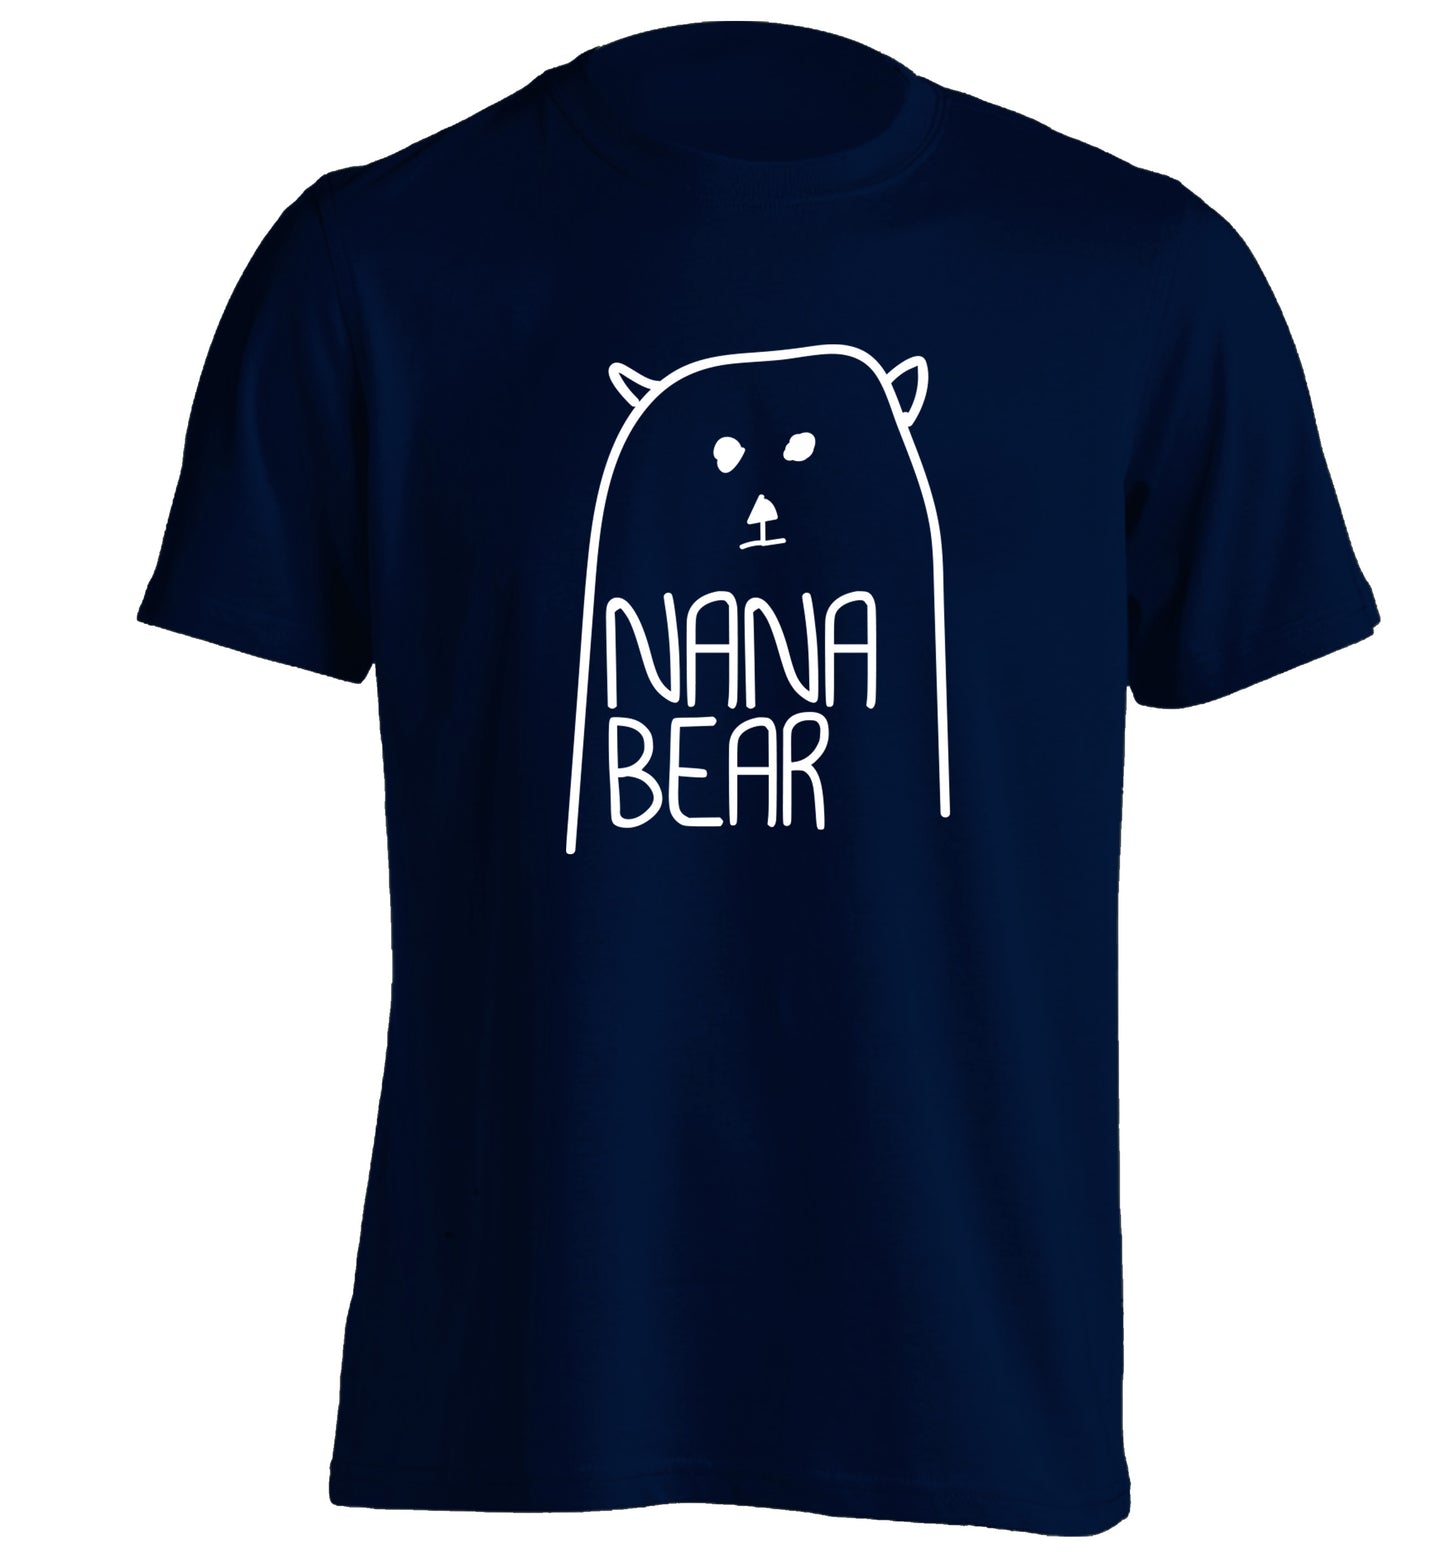 Nana bear adults unisex navy Tshirt 2XL